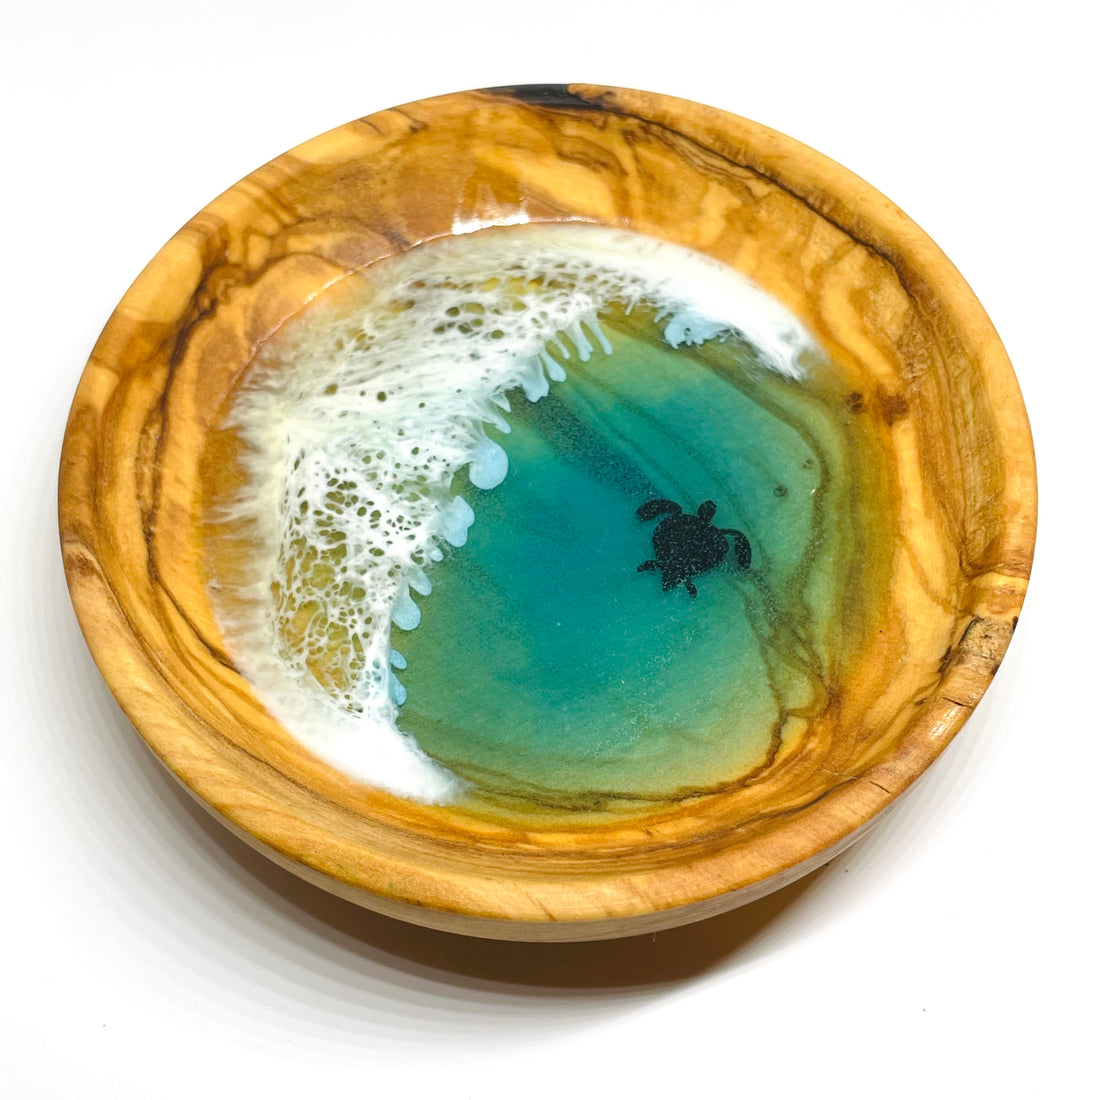 handmade jewelry, Minnesota local wood and resin artist. Ocean waves blue, sea foam sea turtle, olive wood turned ring trinket bowl.